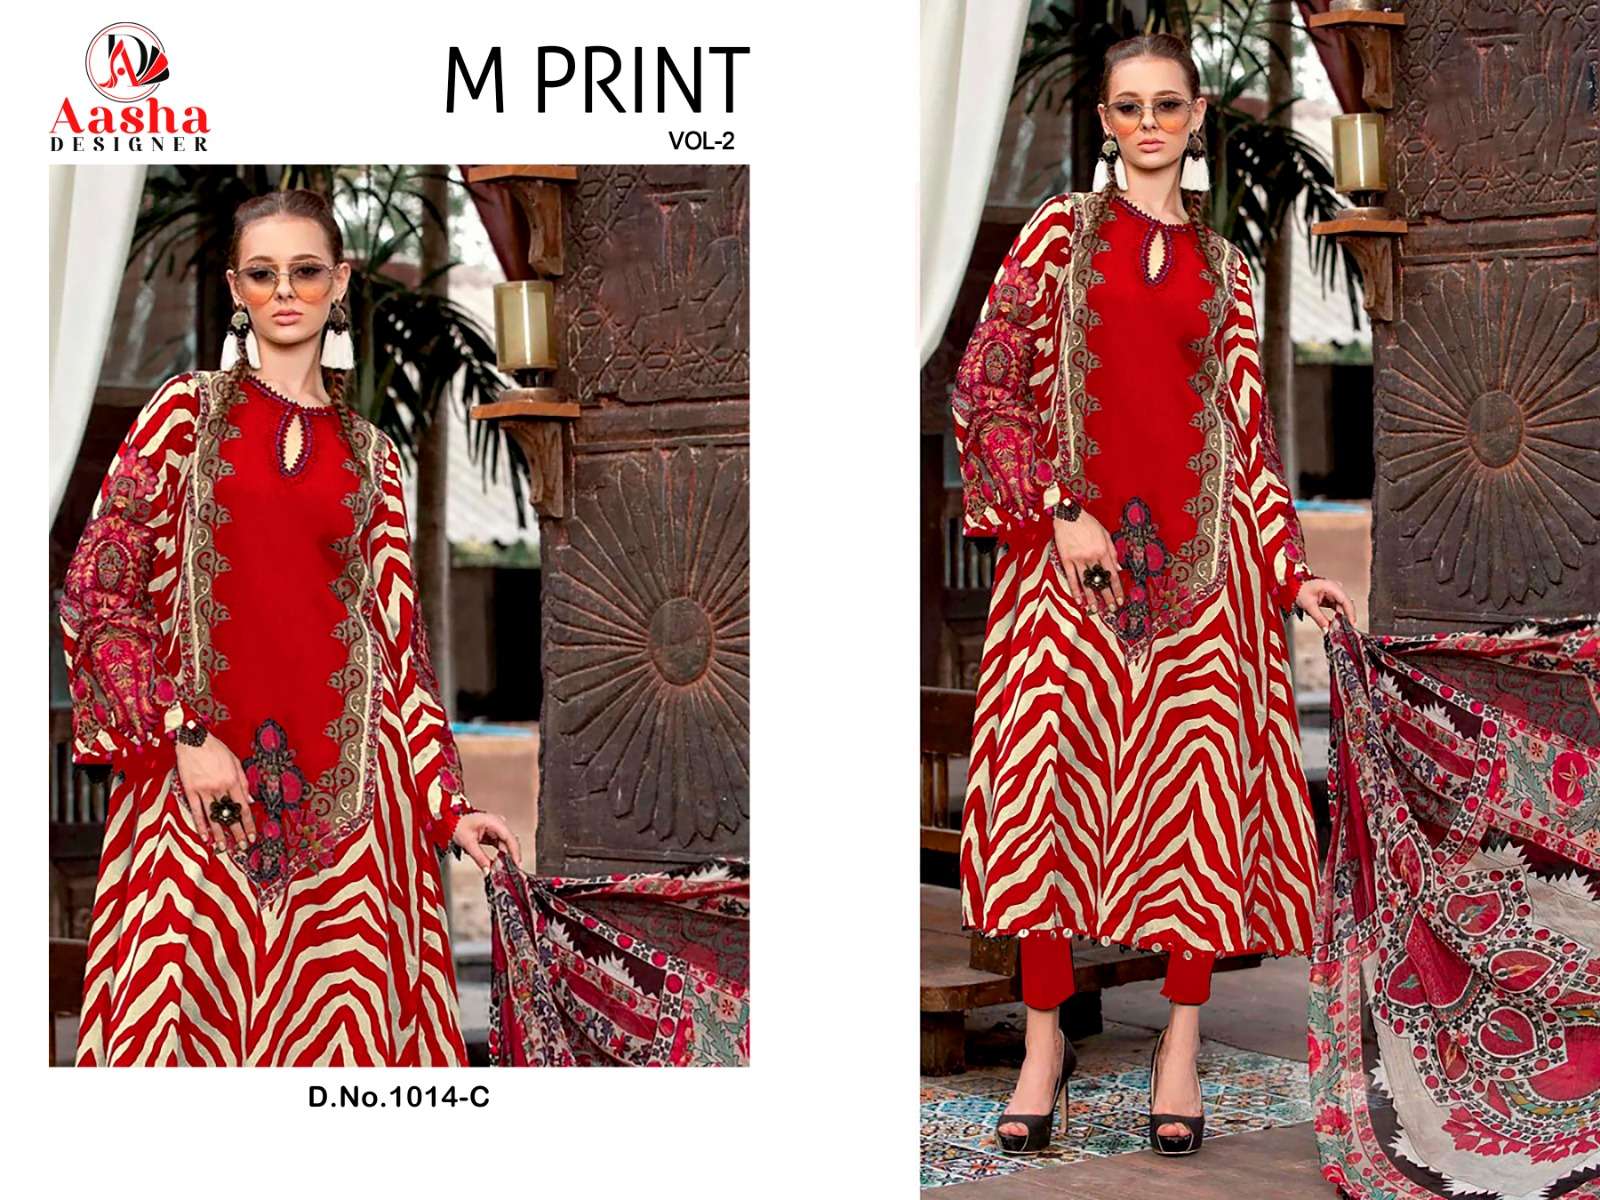 aasha designer m print vol-2 1014 colour series latest designer pakistani salwar kameez at wholesale price surat gujarat